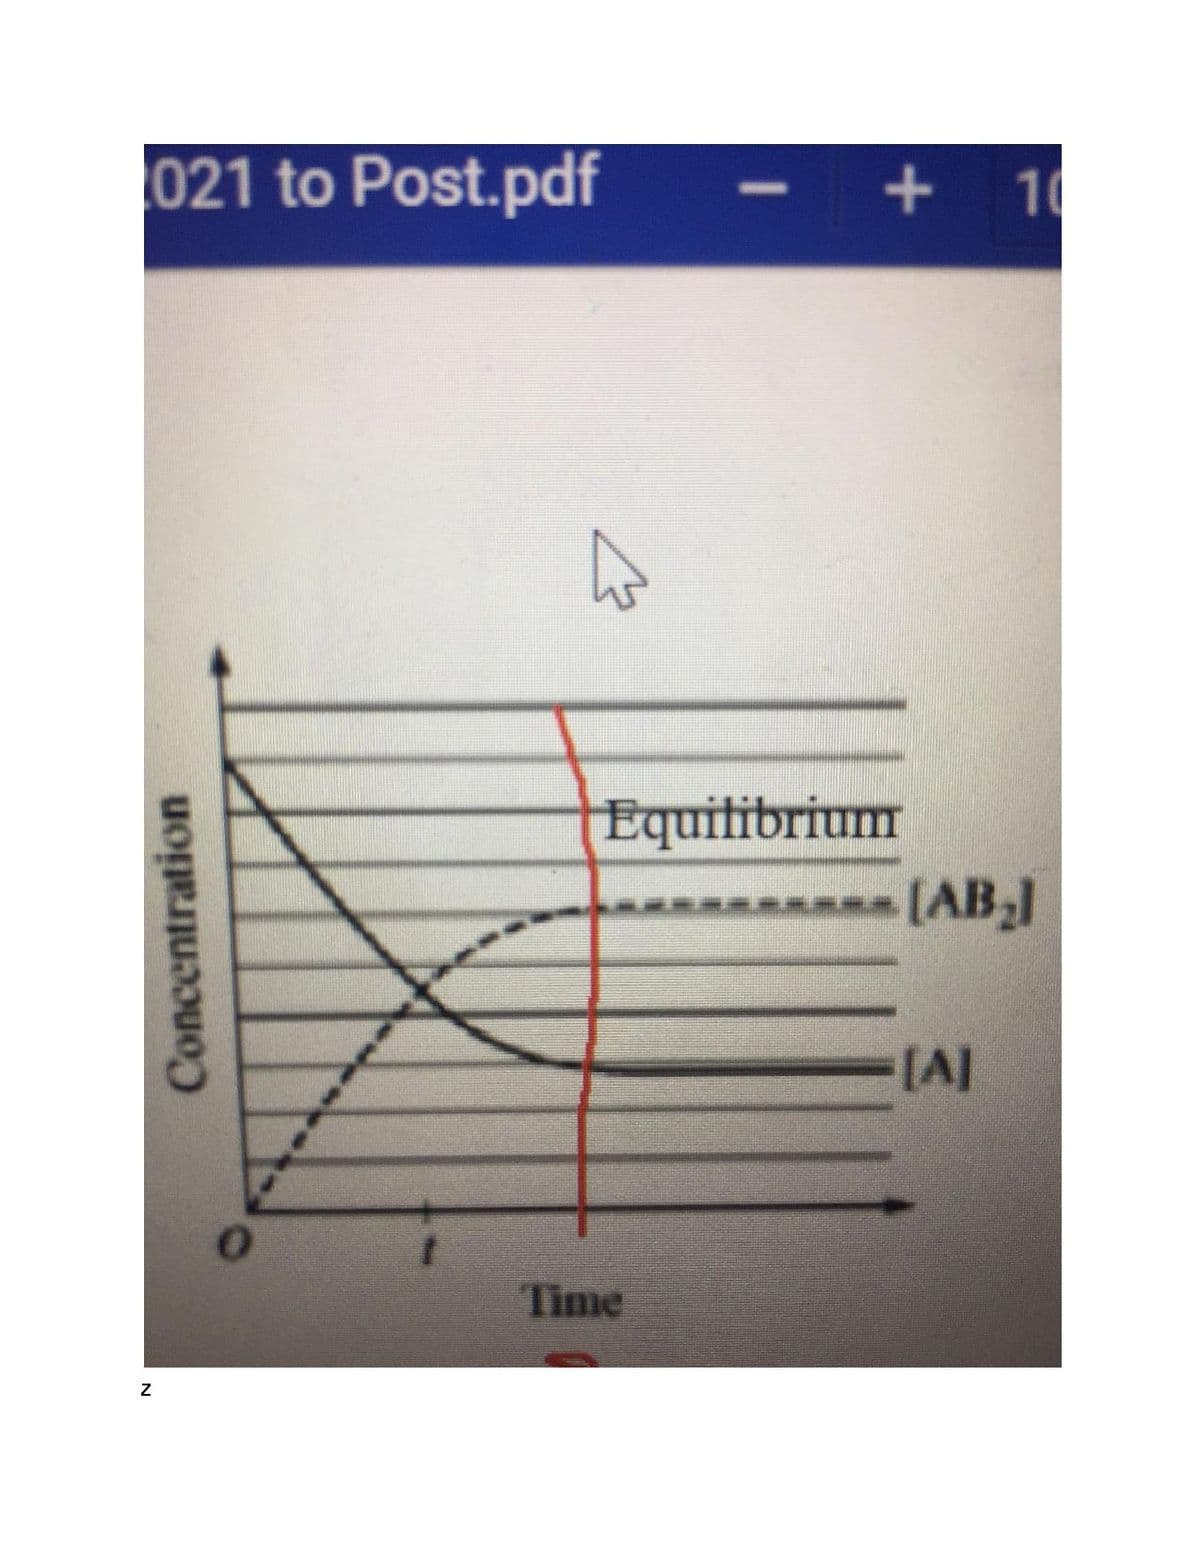 021 to Post.pdf
+10
Equitibrium
[AB]
Time
Concentration
